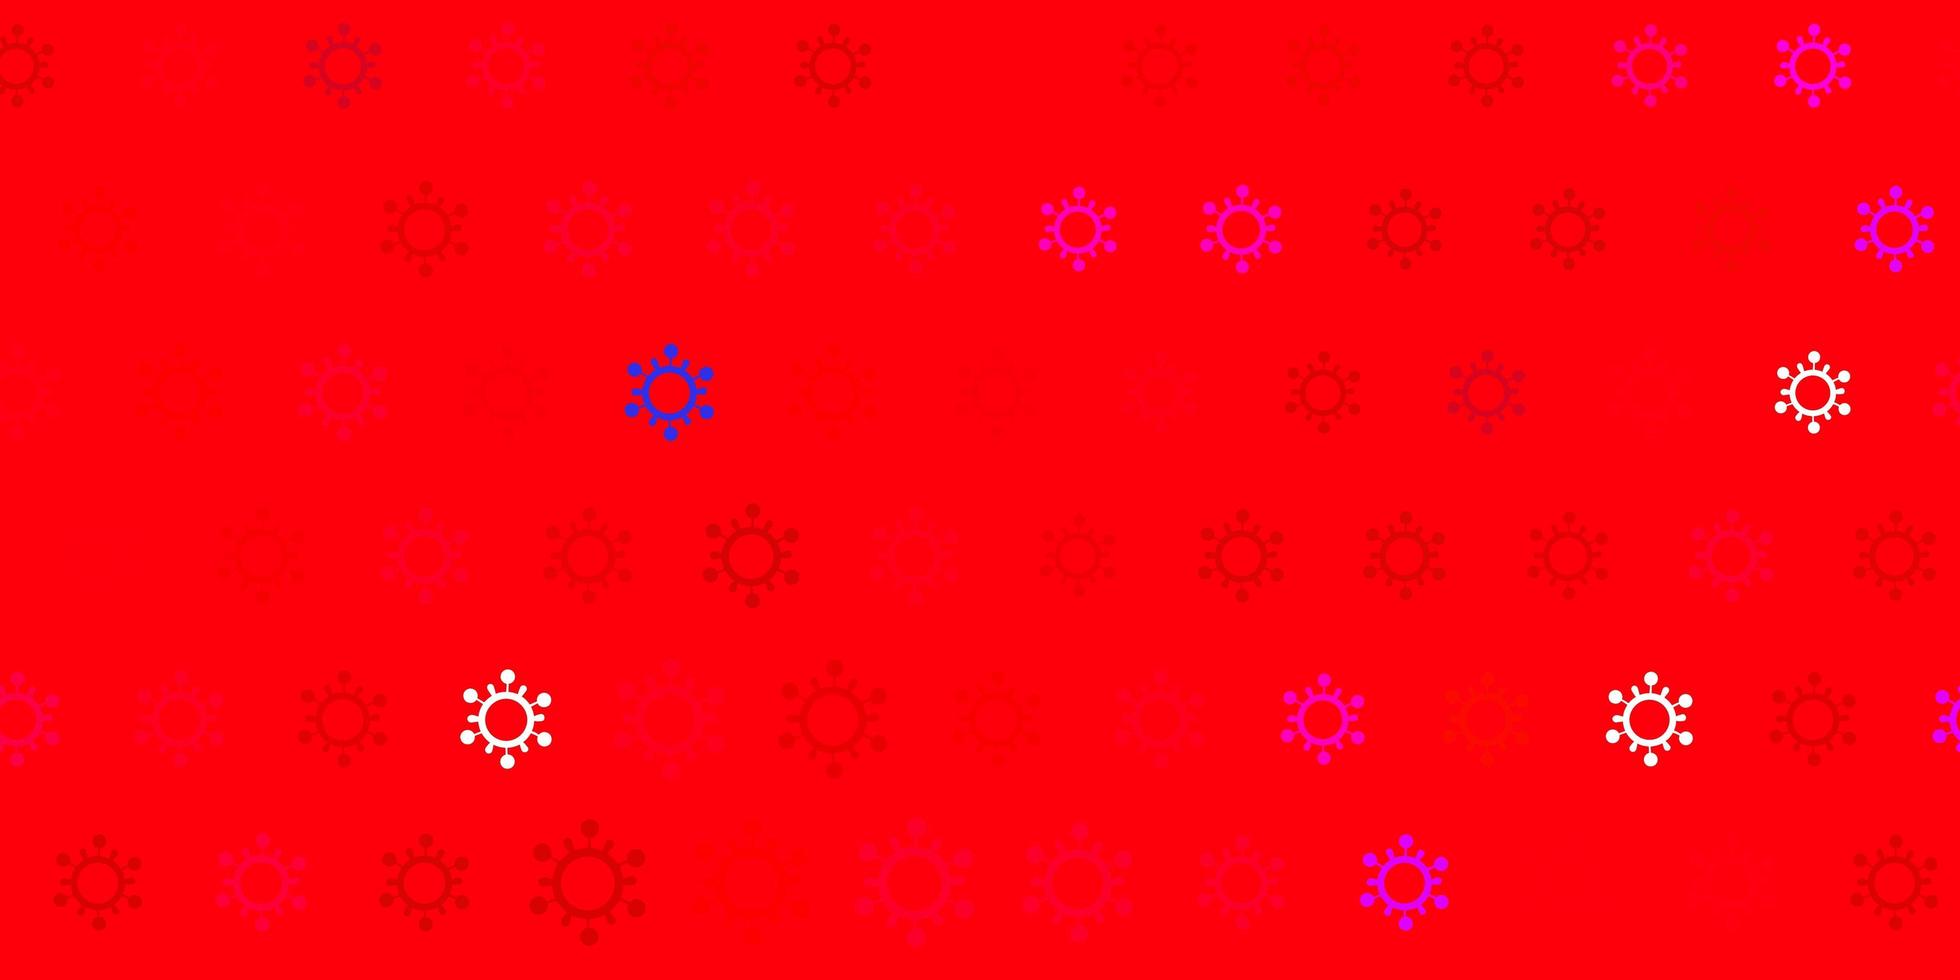 textura de vector rojo oscuro con símbolos de enfermedades.